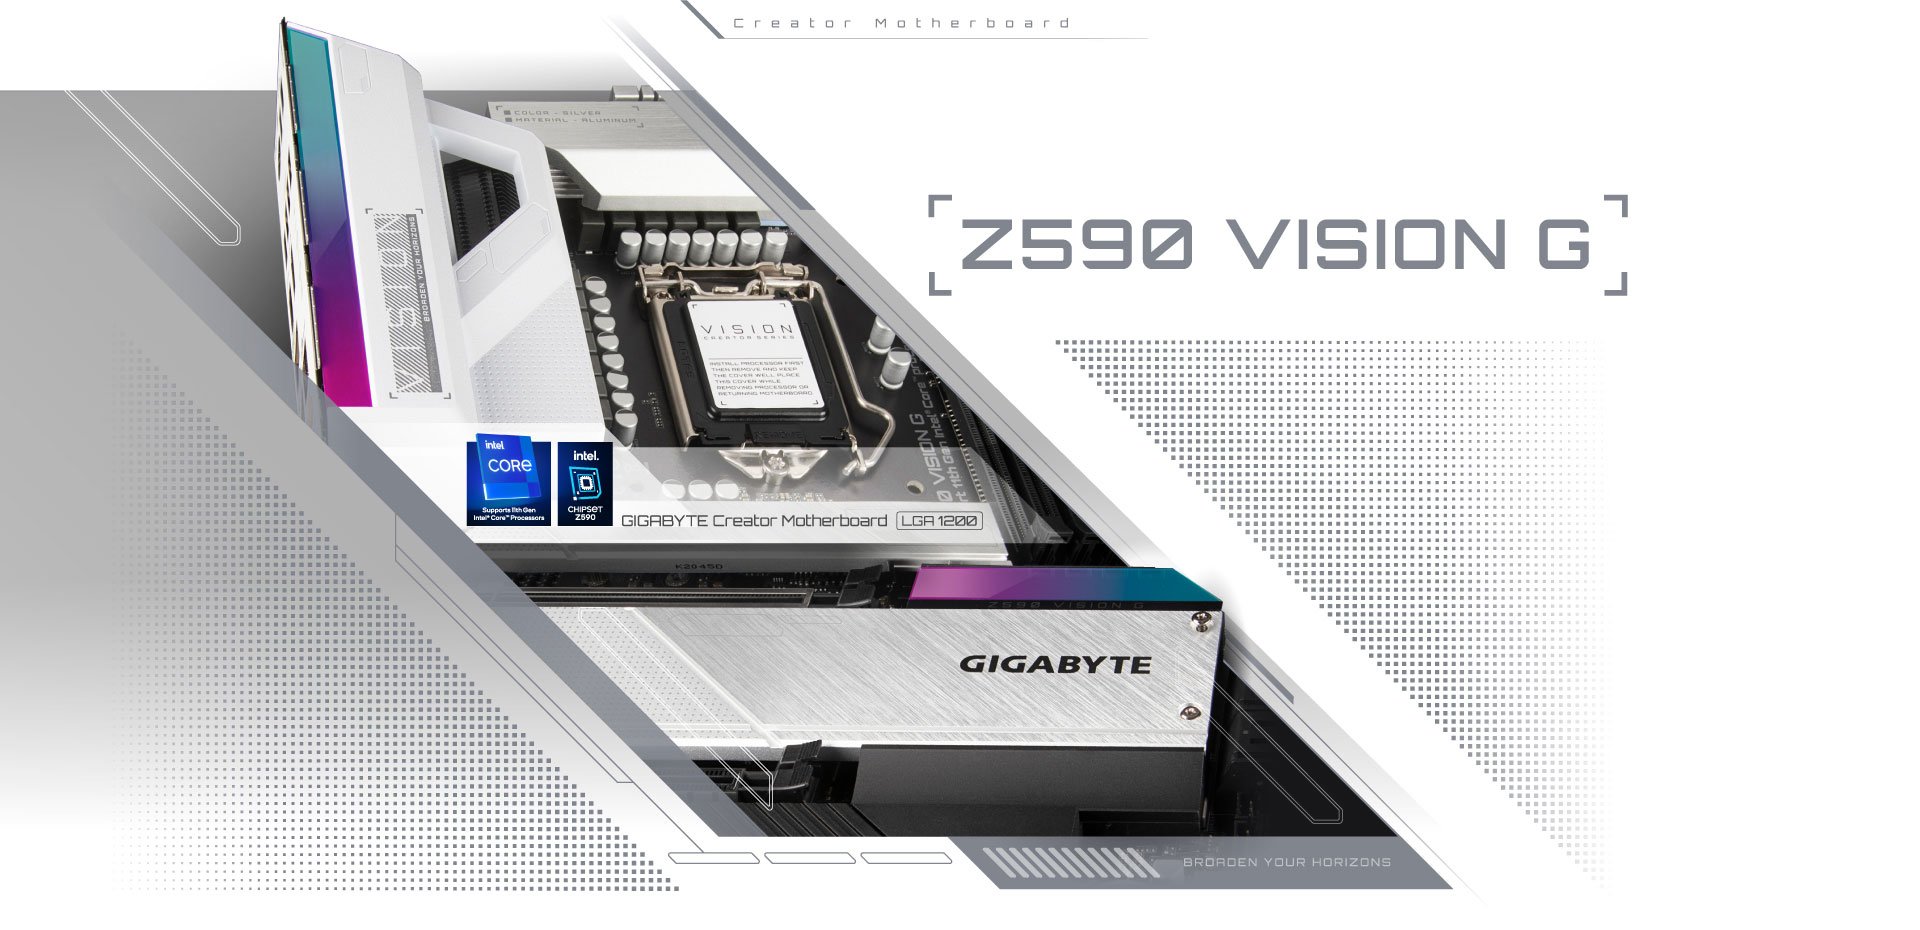 gigabyte-z590-vision-g-motherboard-specs